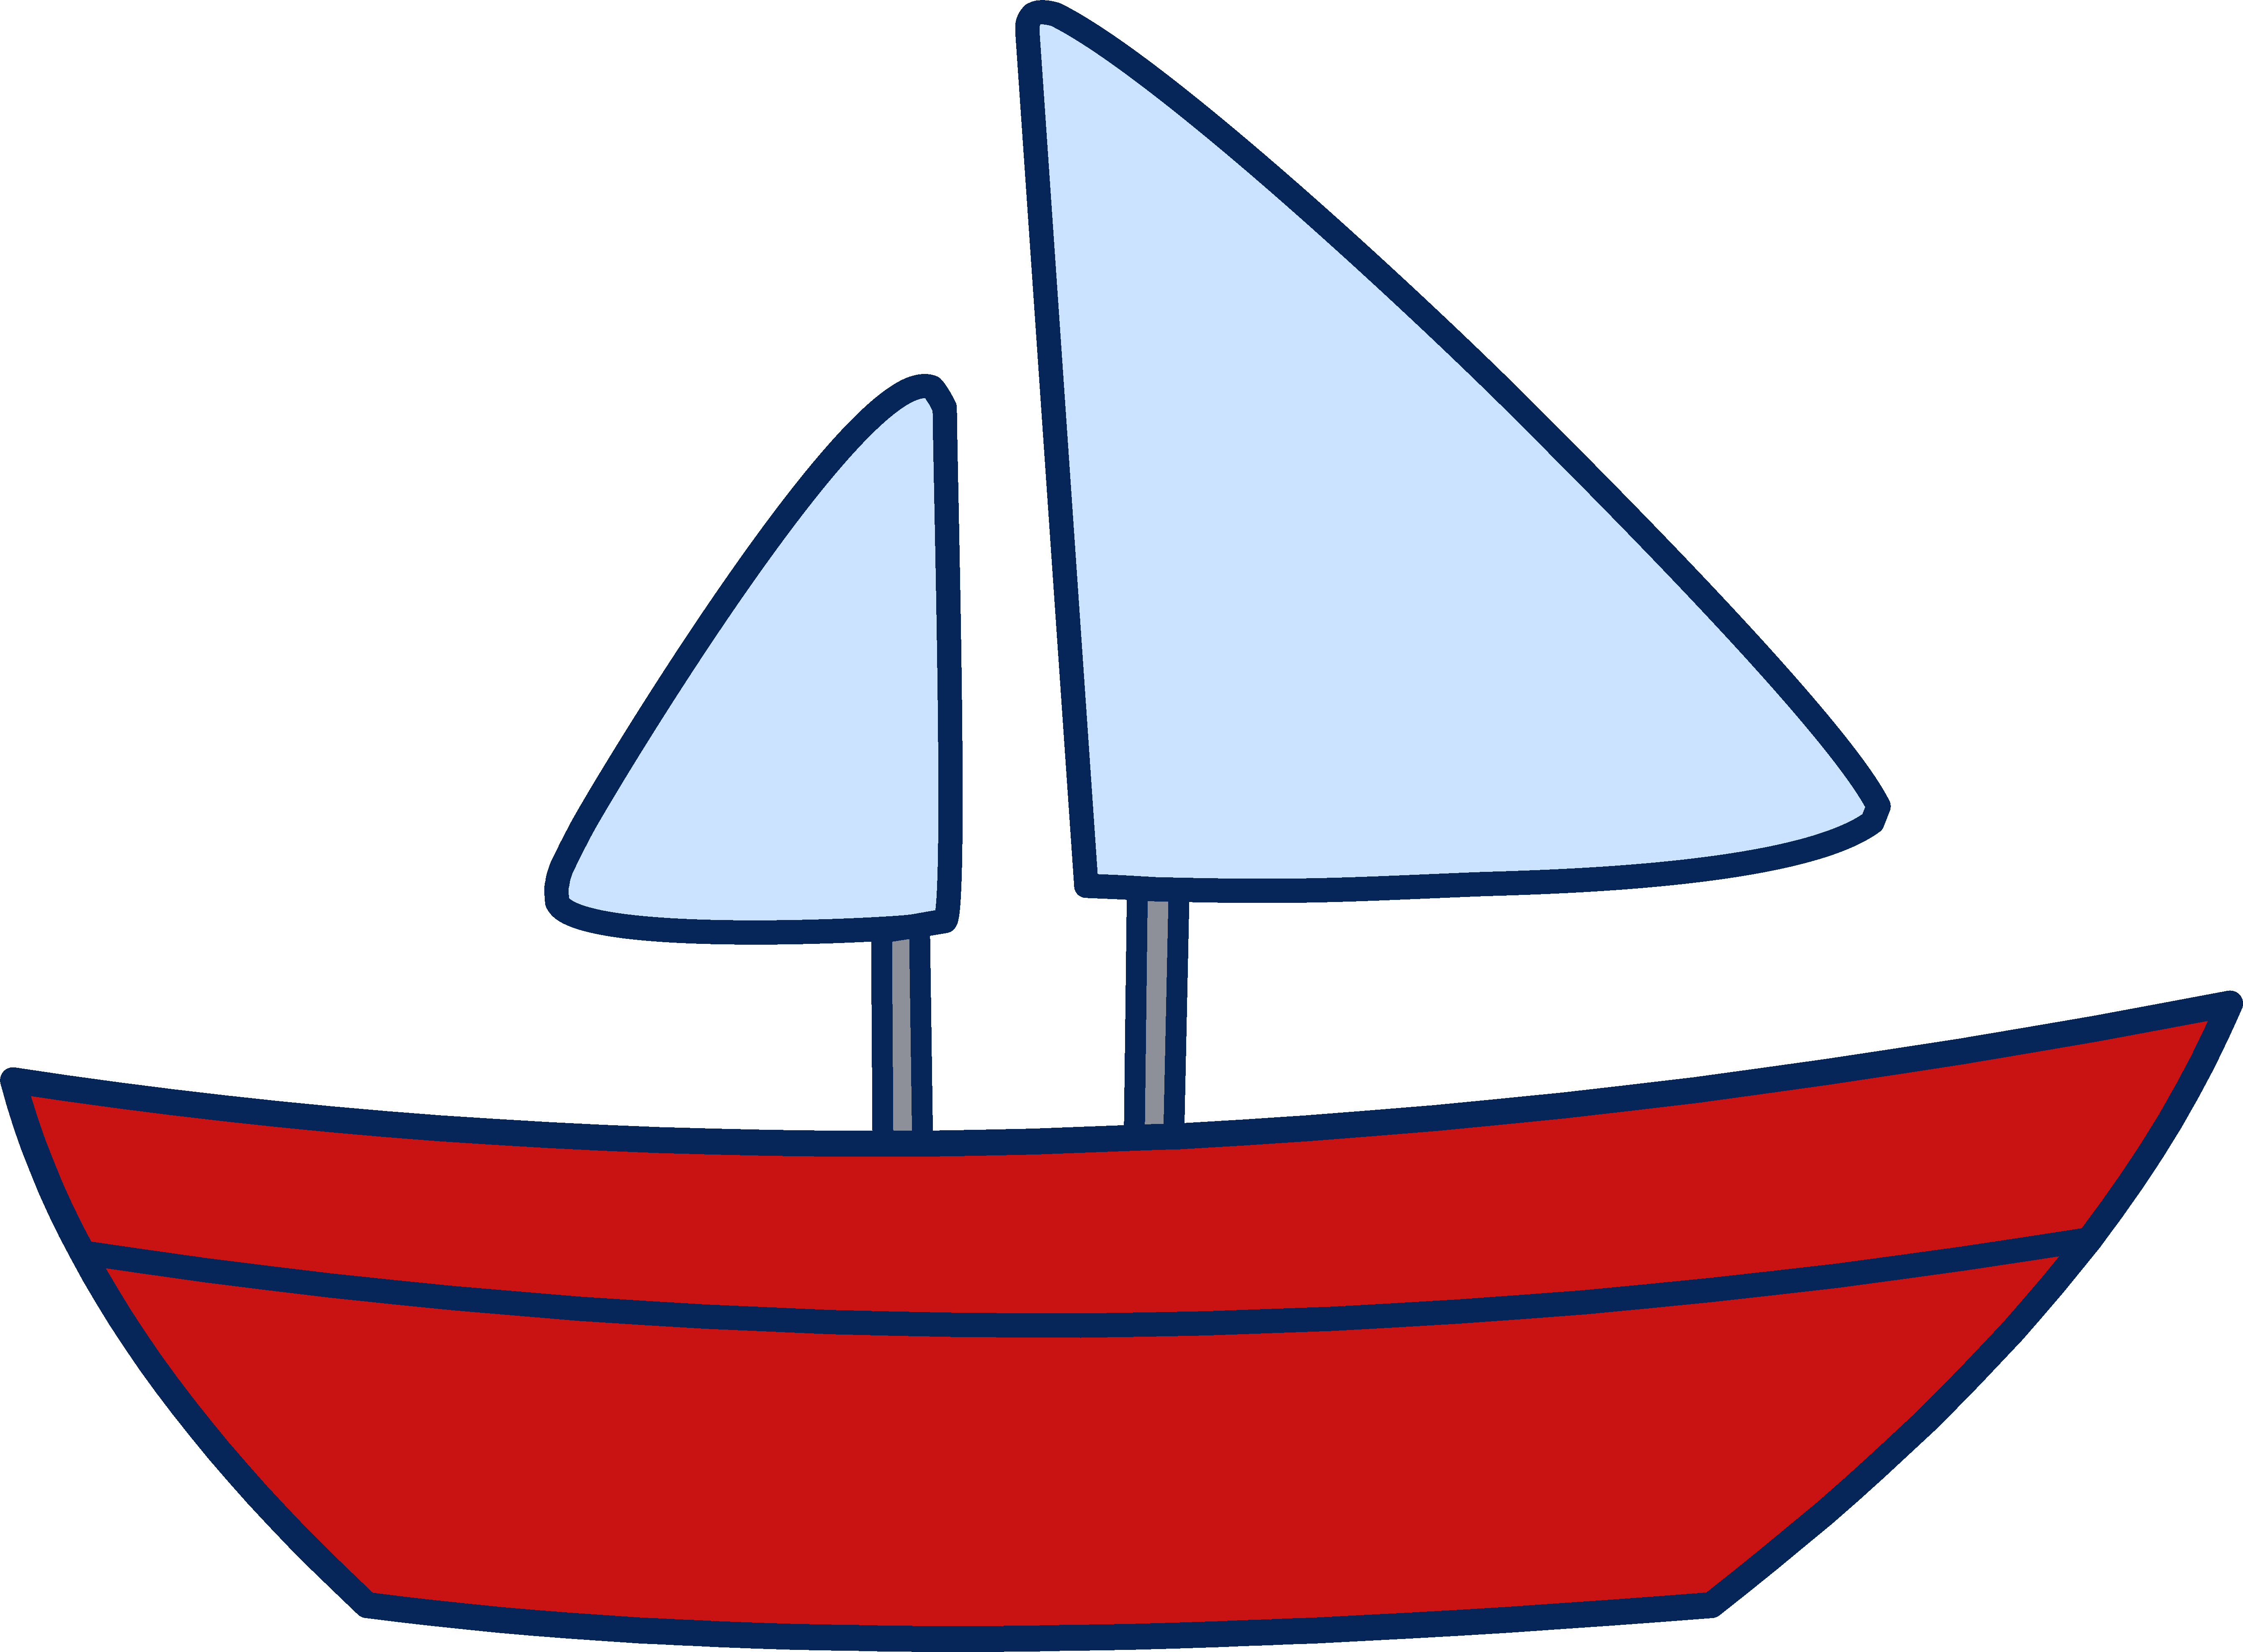 Sailboat clip art free clipart images